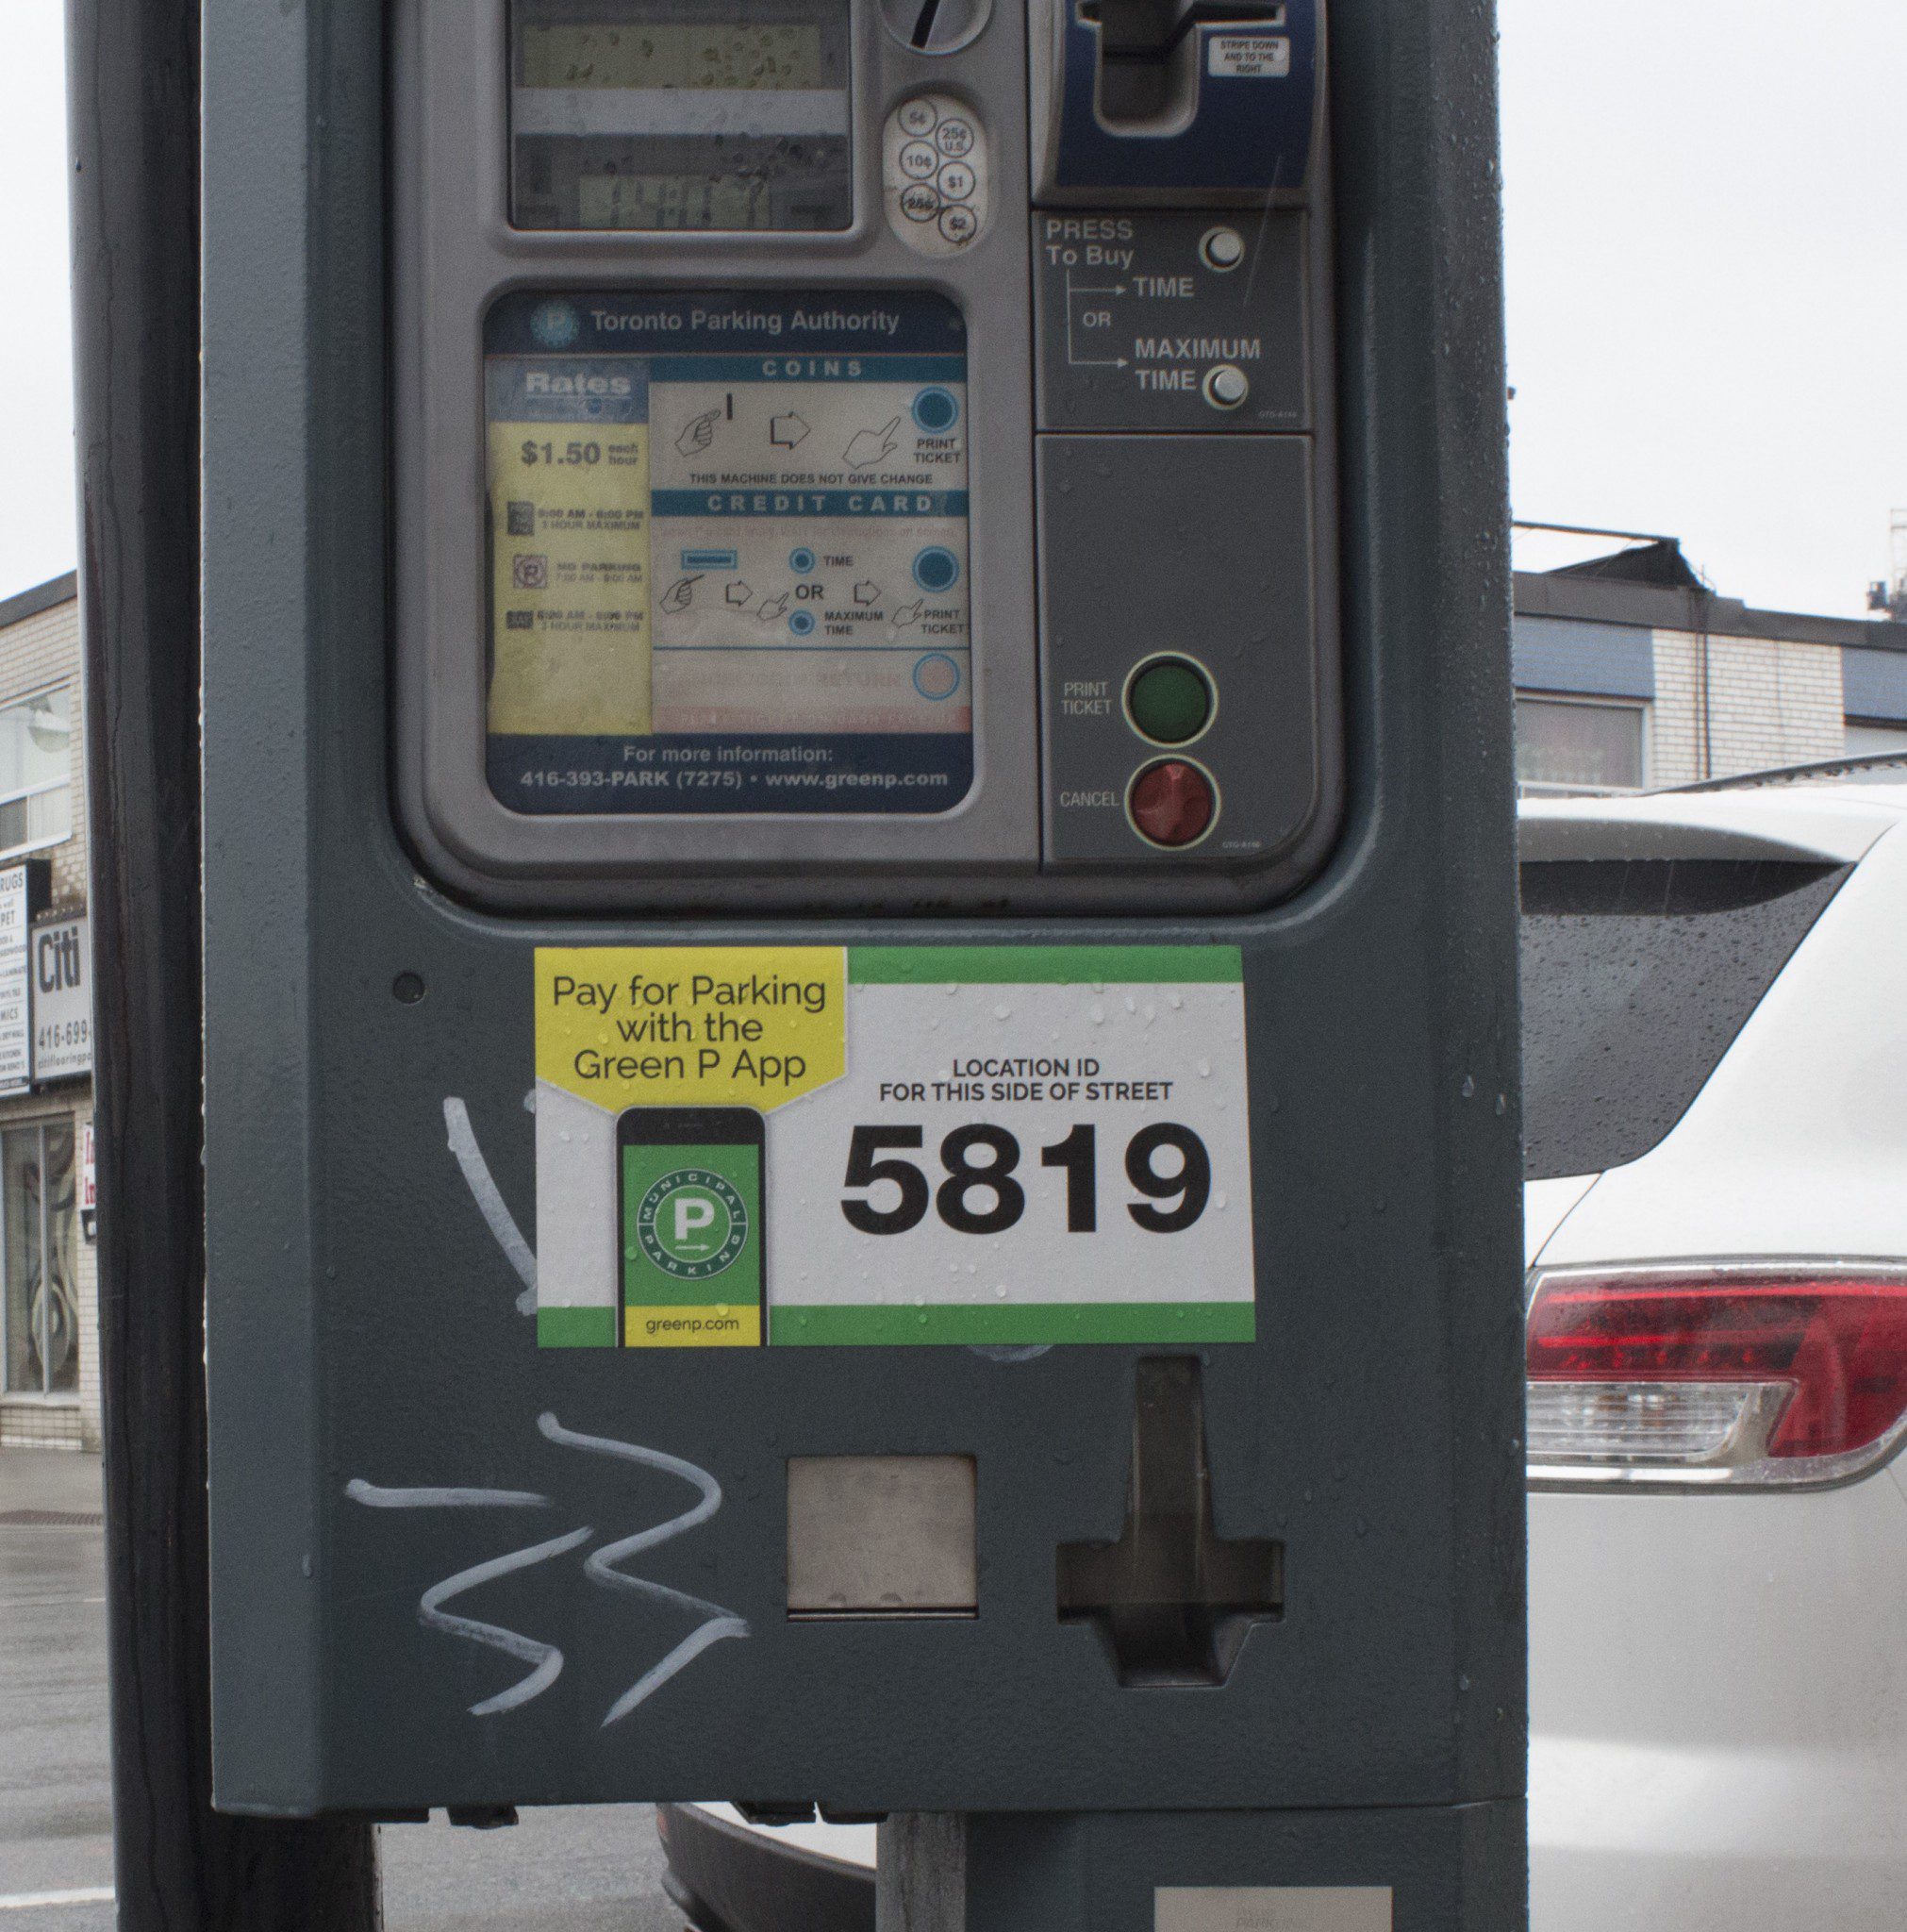 sticker covers graffiti on parking meter